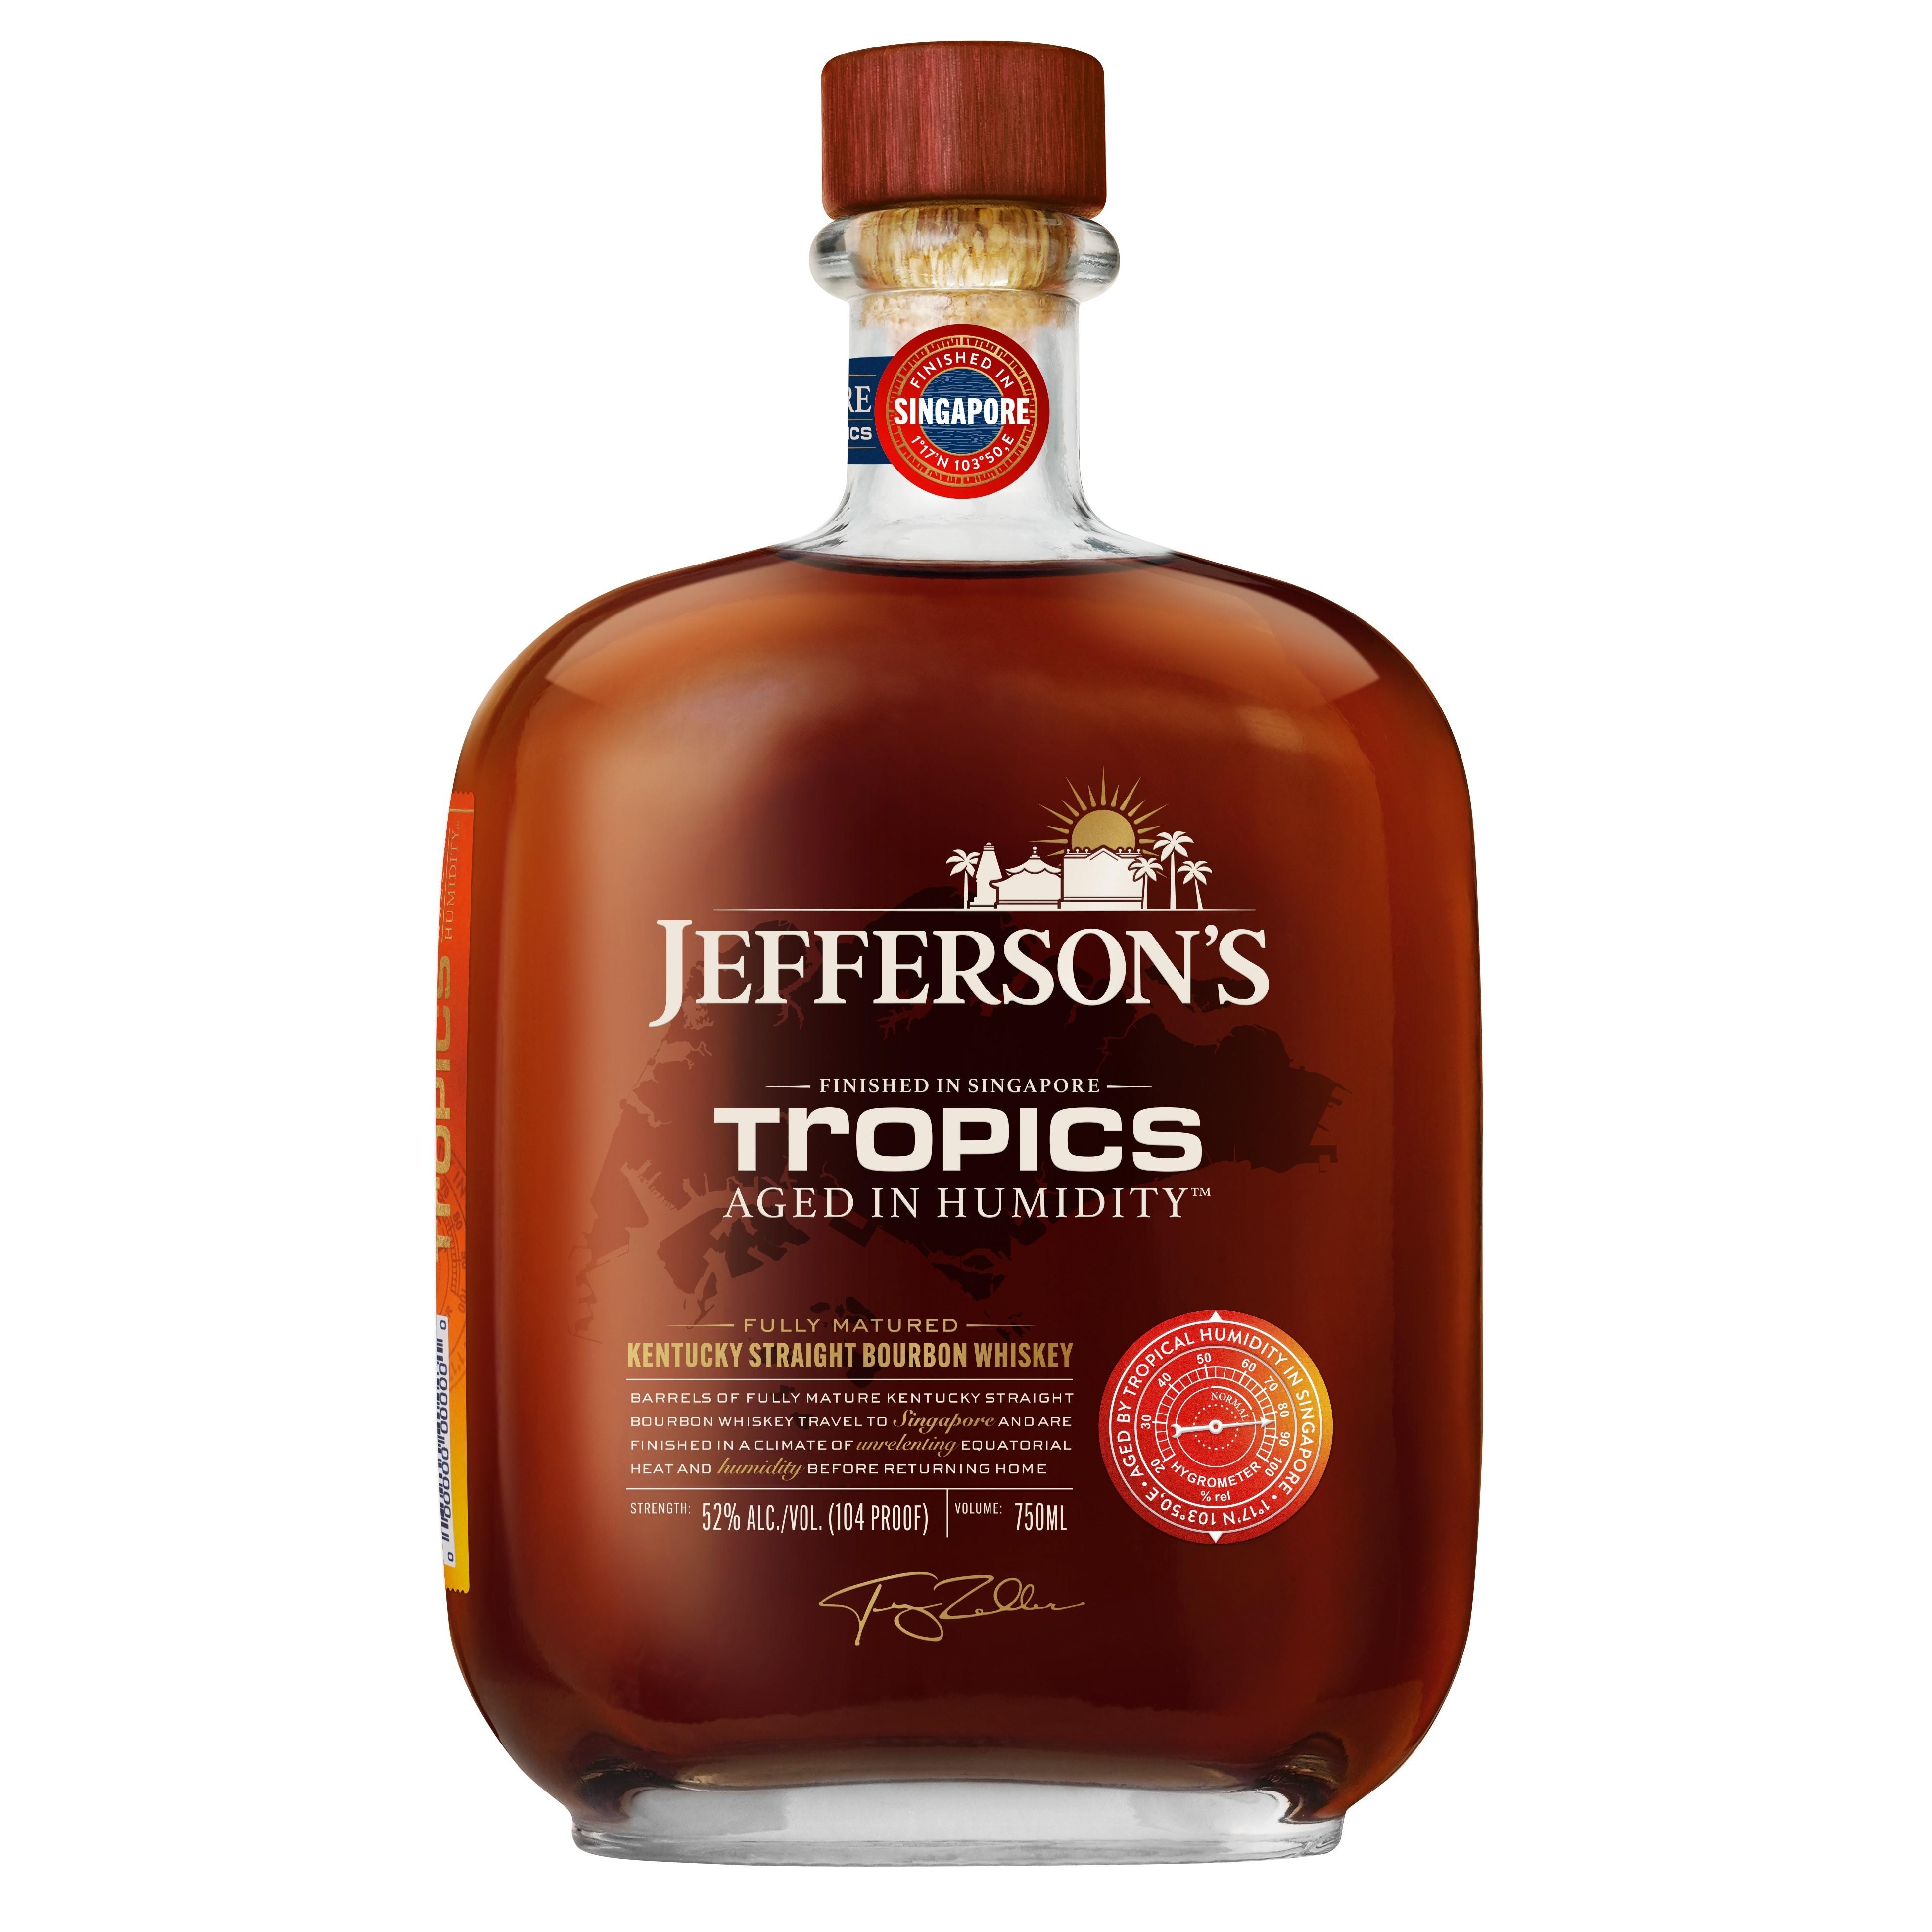 Jefferson's Tropics Singapore Straight Kentucky Bourbon Whiskey - 750ml Bottle